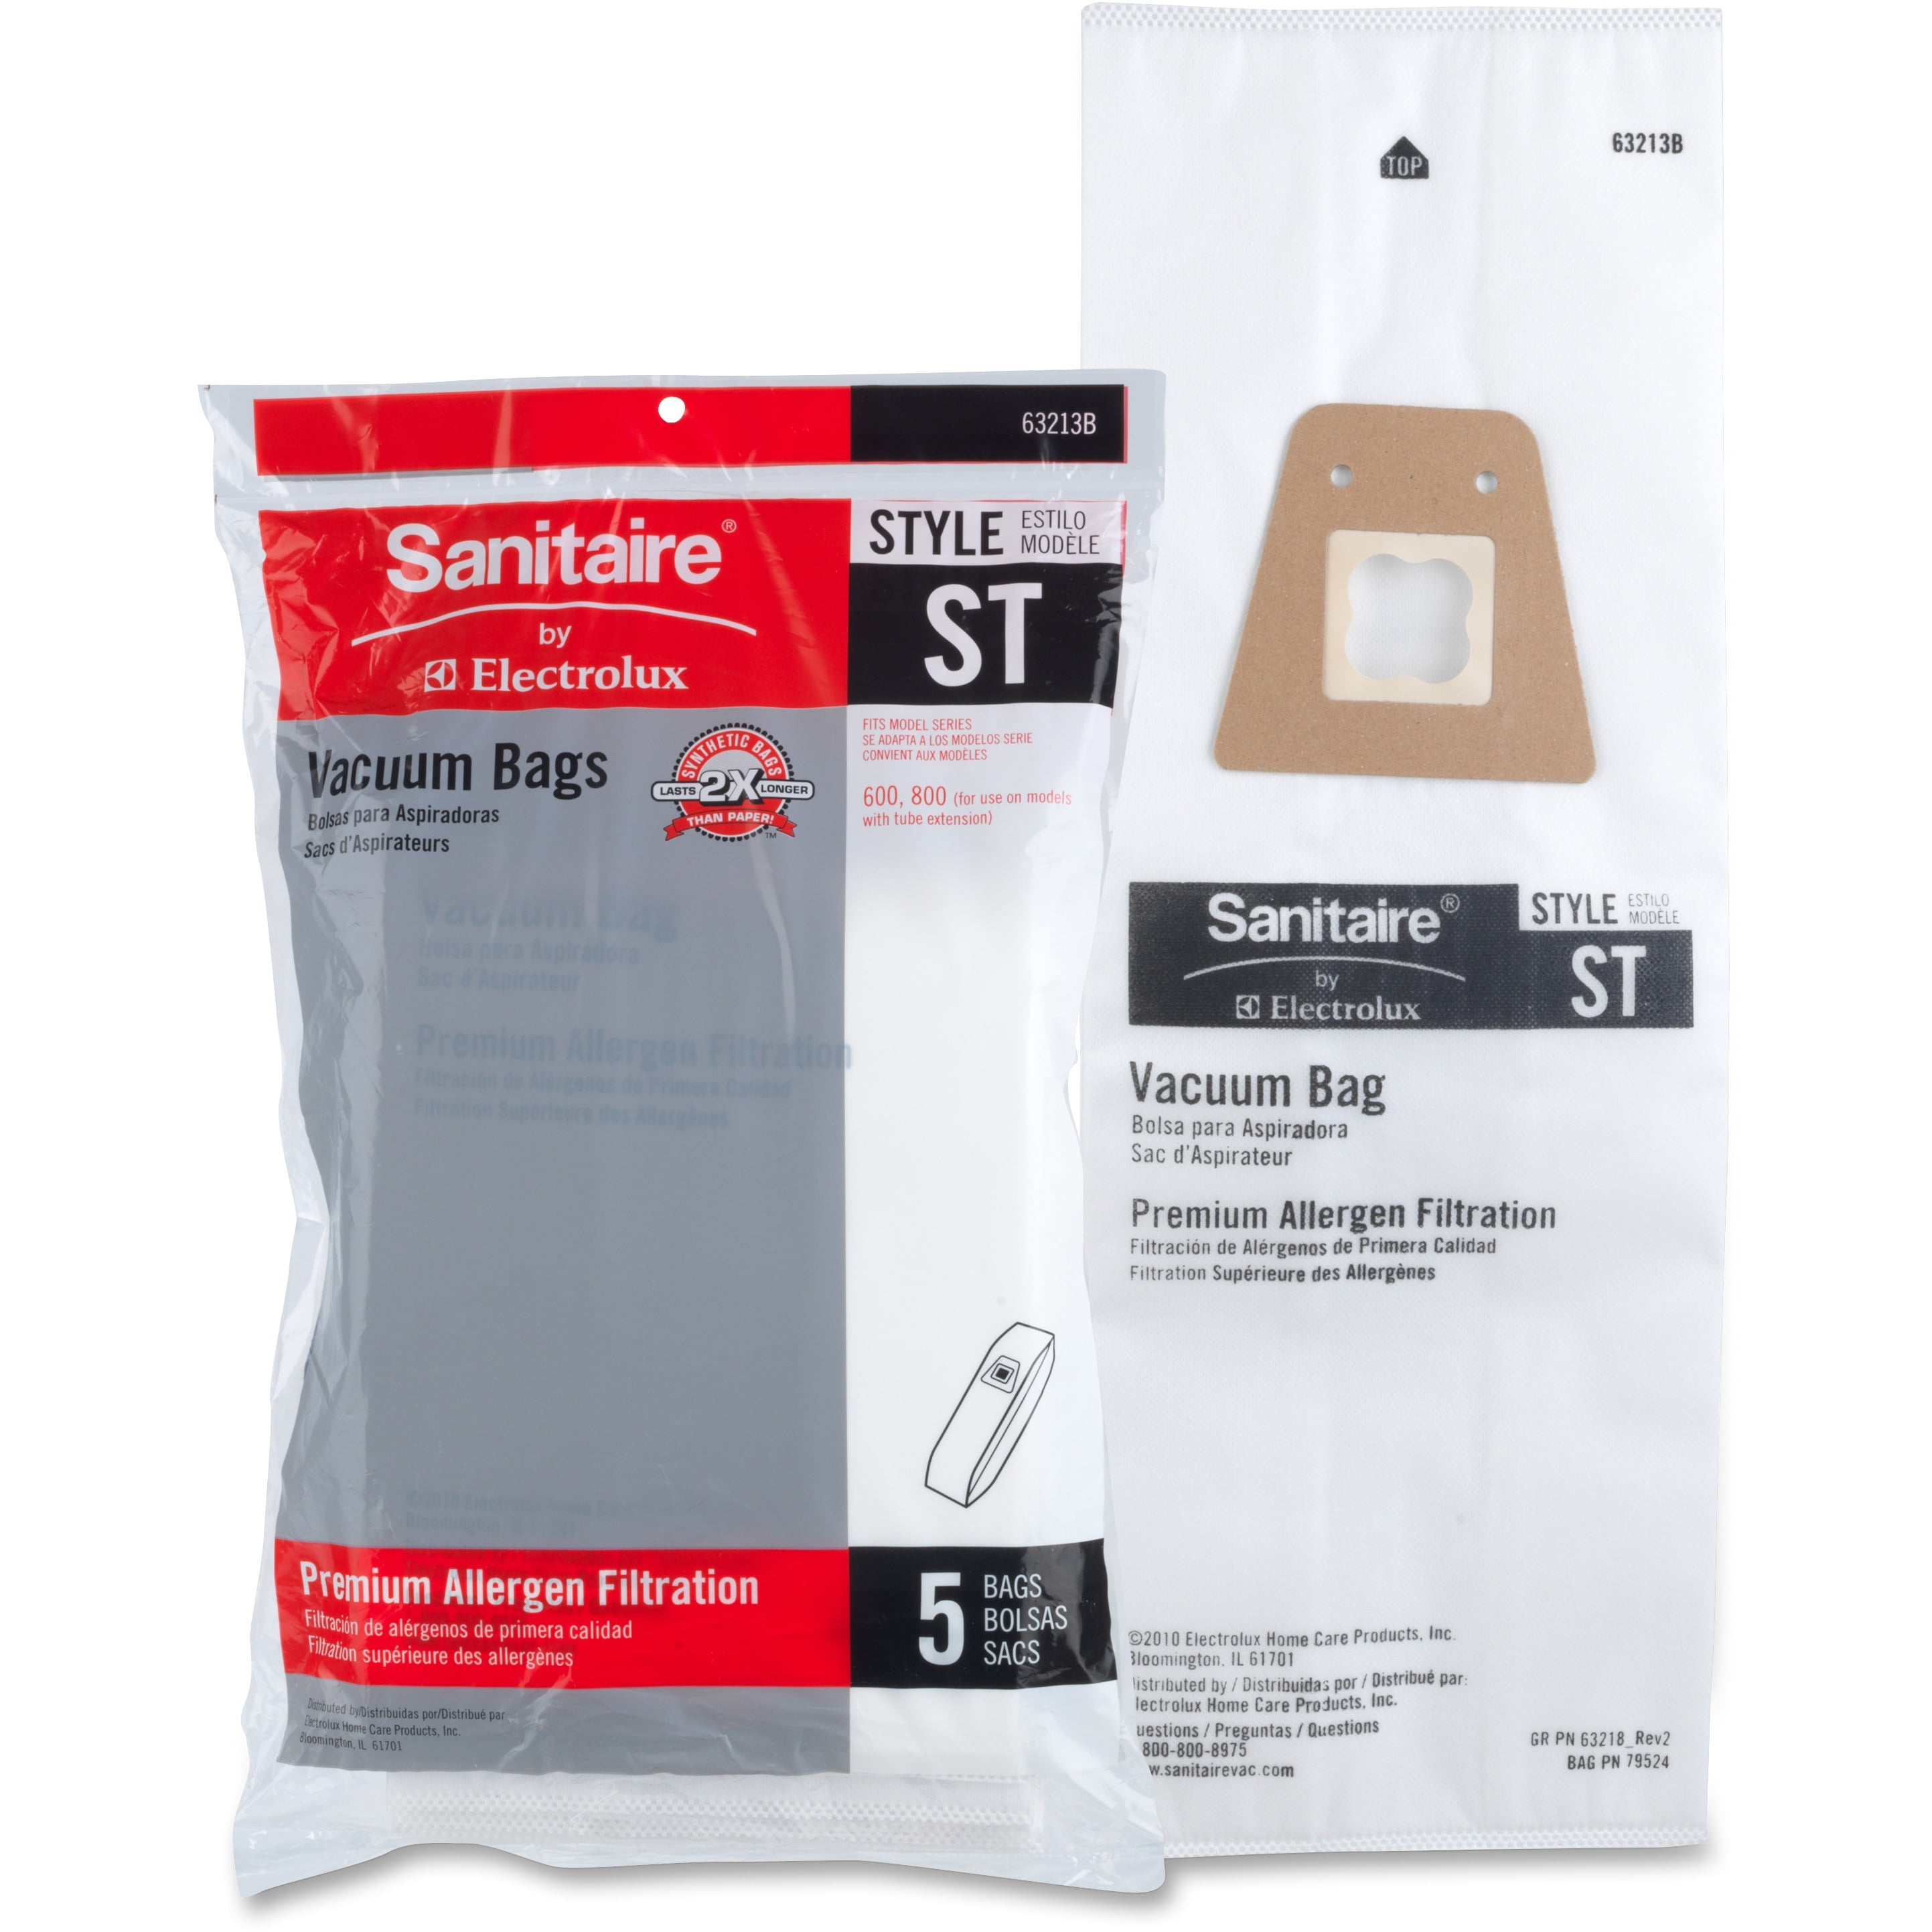 Details about   Electrolux/Sanitaire Allergen Style ST Vacuum Bags 